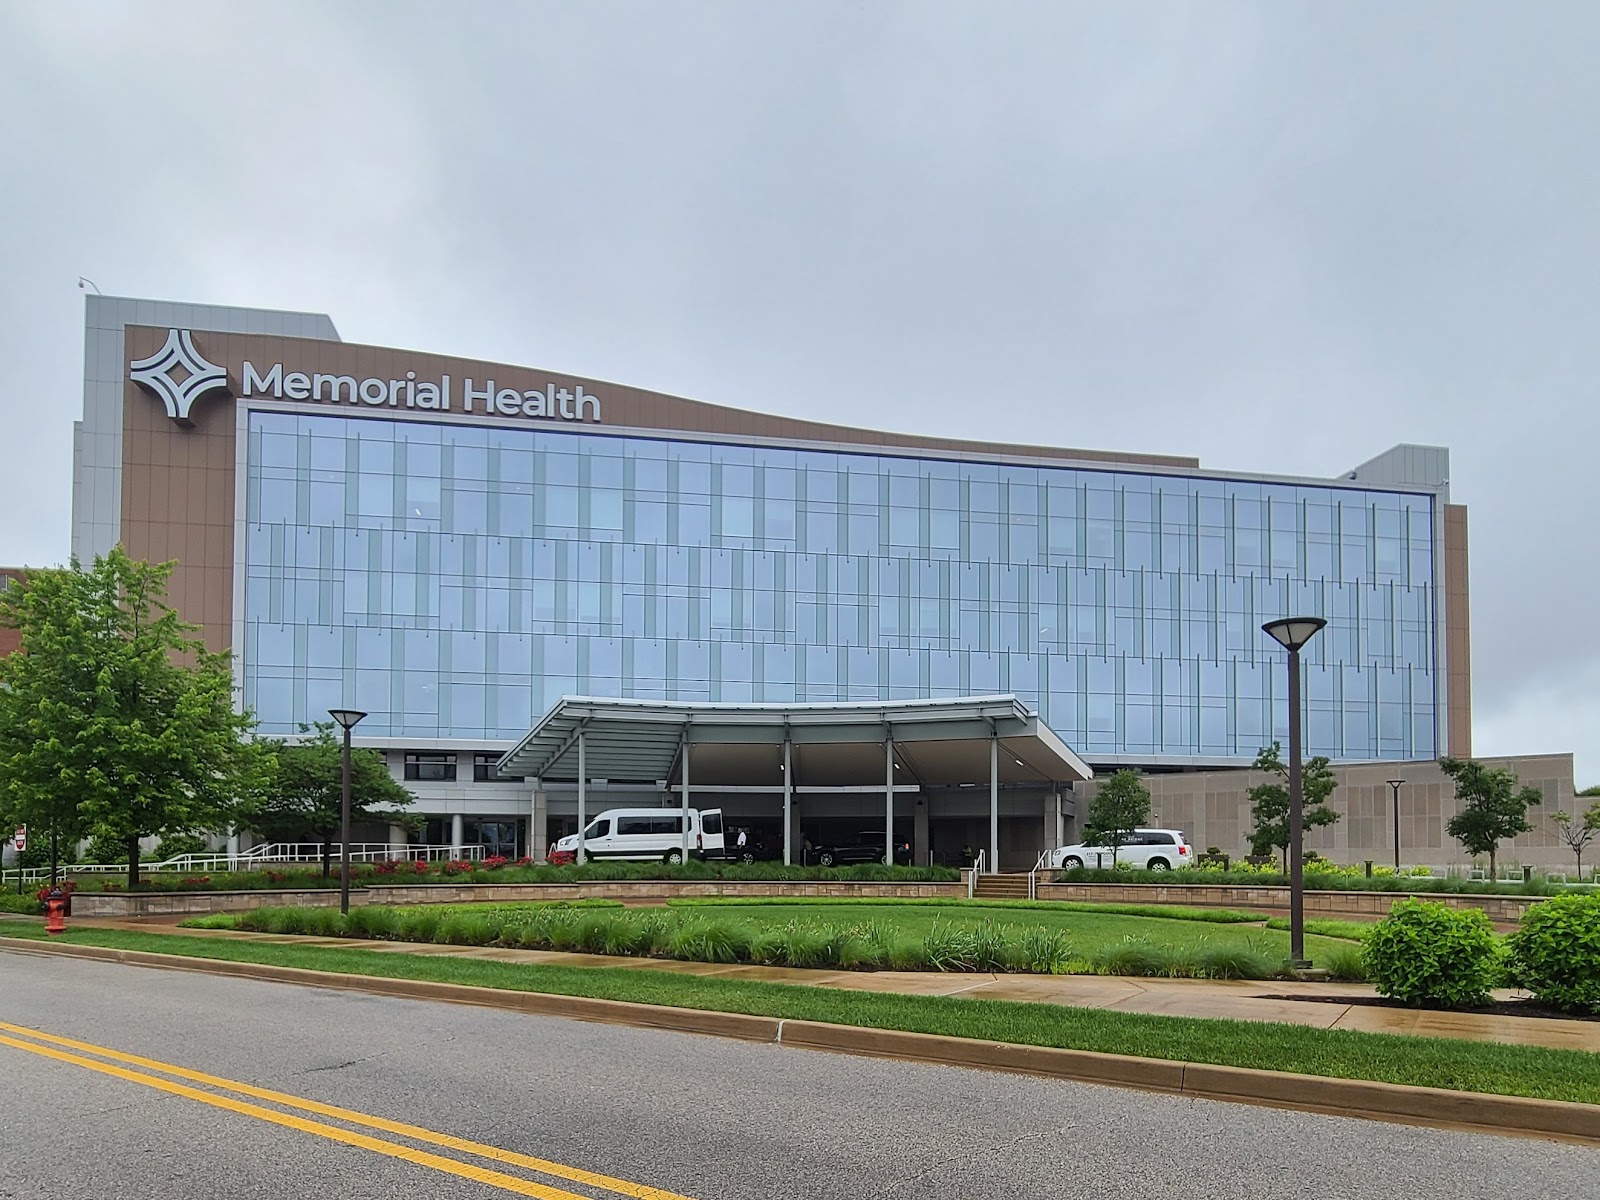 Memorial Medical Center